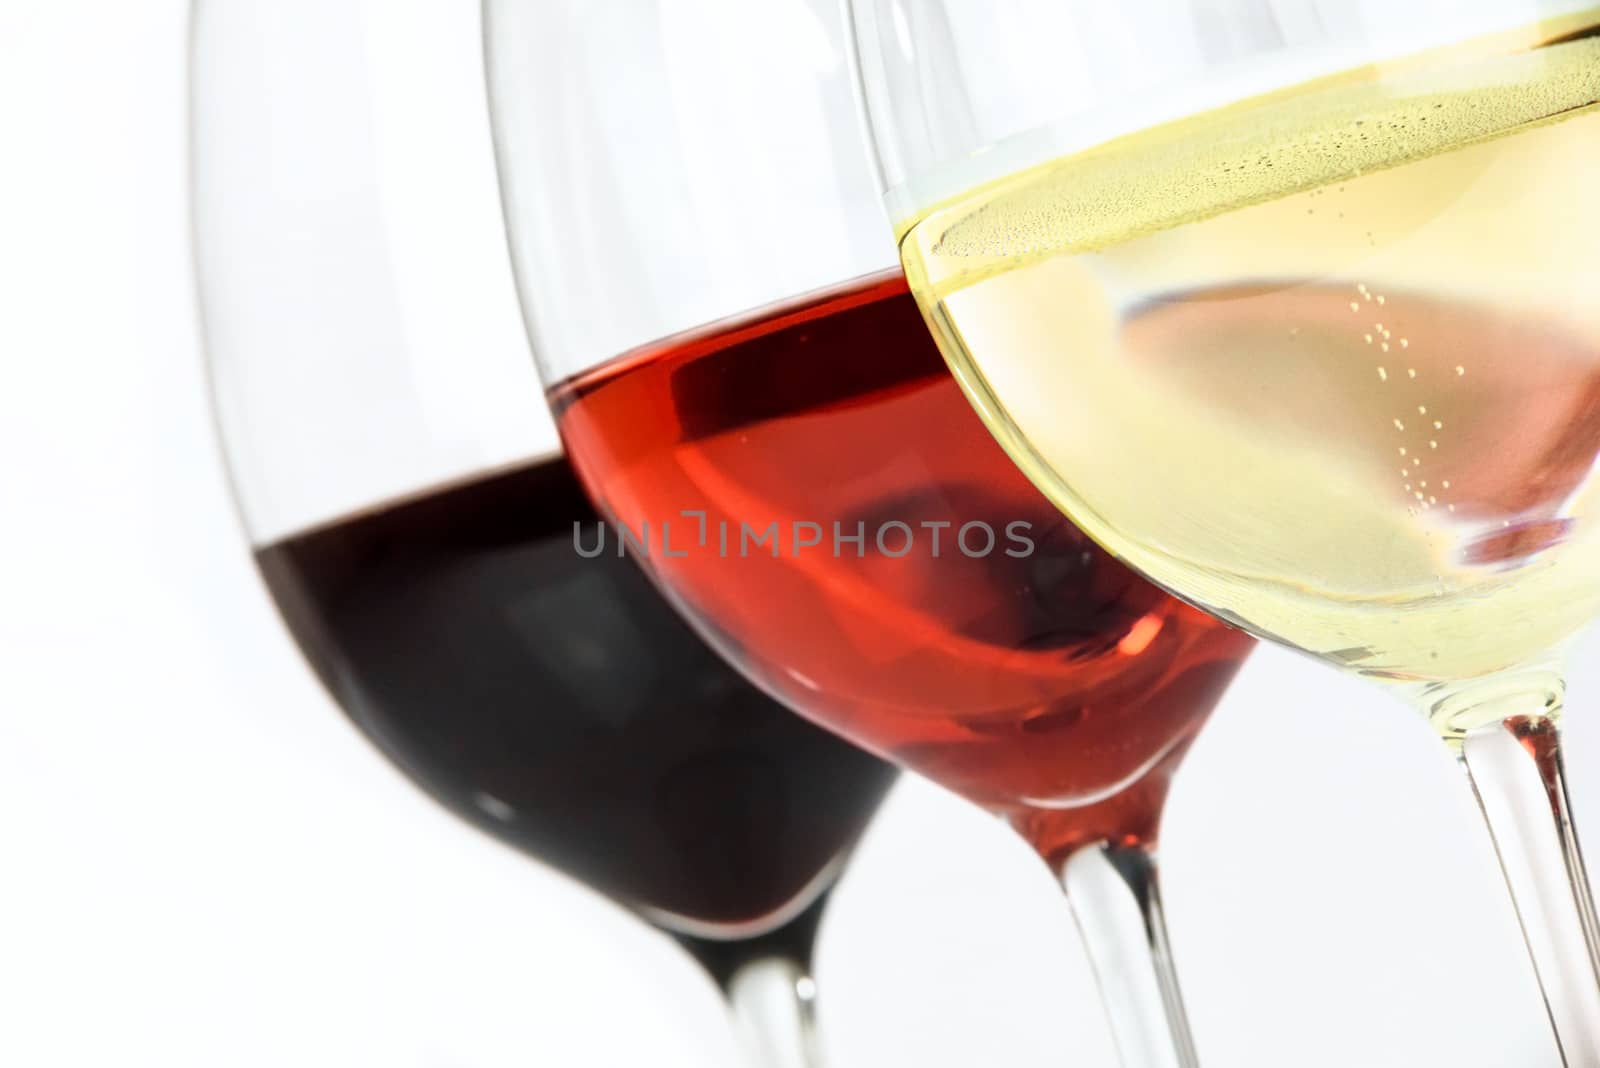 Three types of wine by wdnet_studio